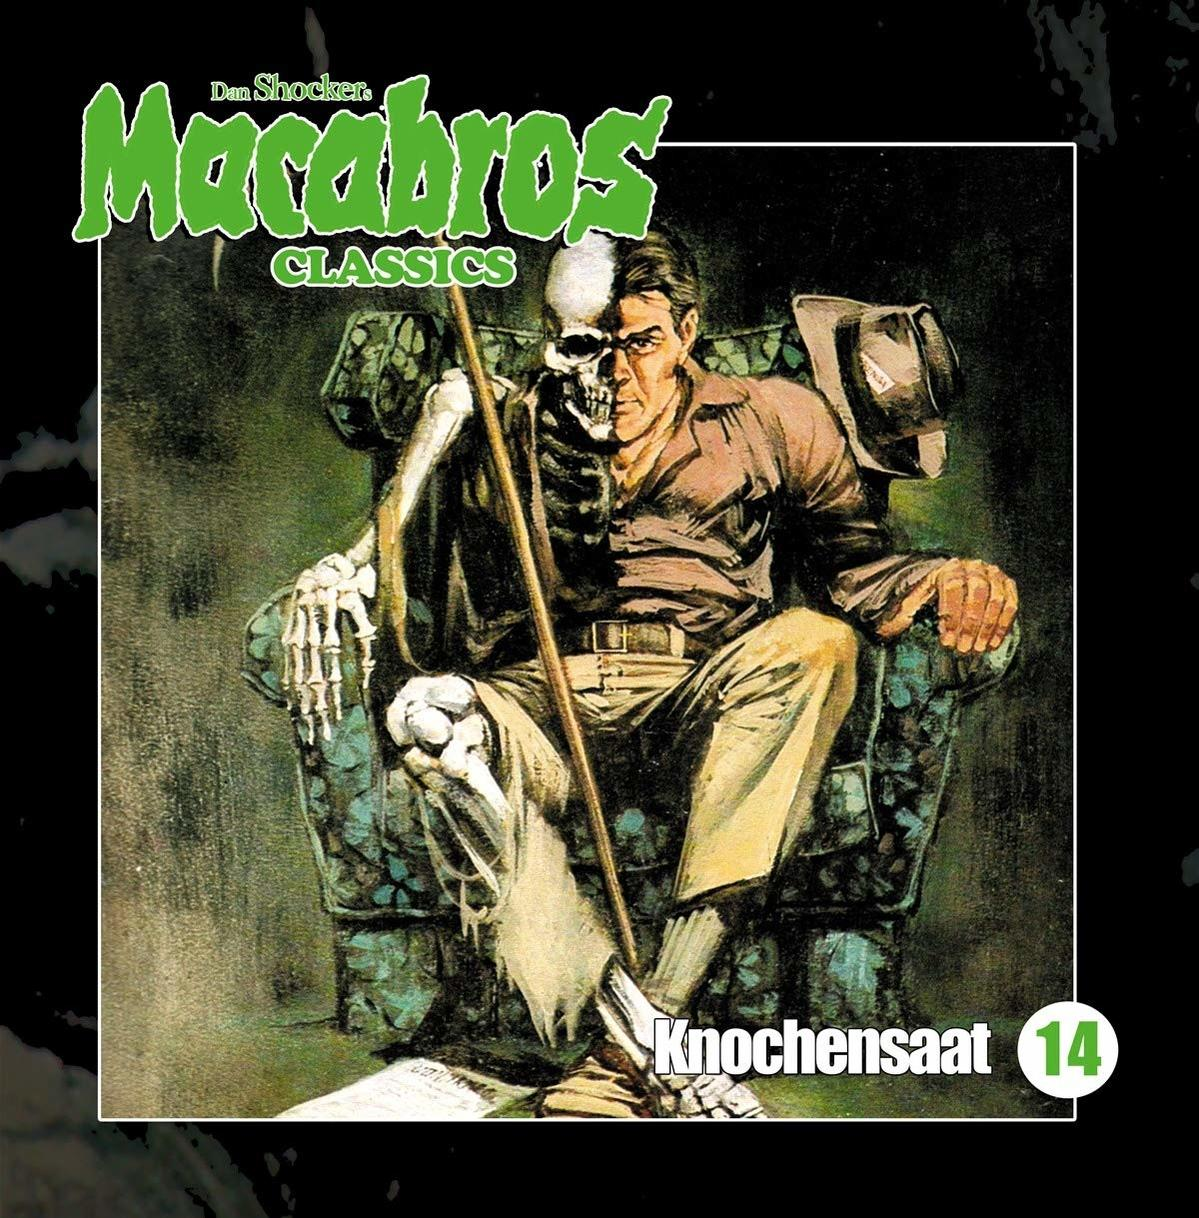 Shocker (CD) - 14 Dan Folge Macabros - Knochensaat Classics